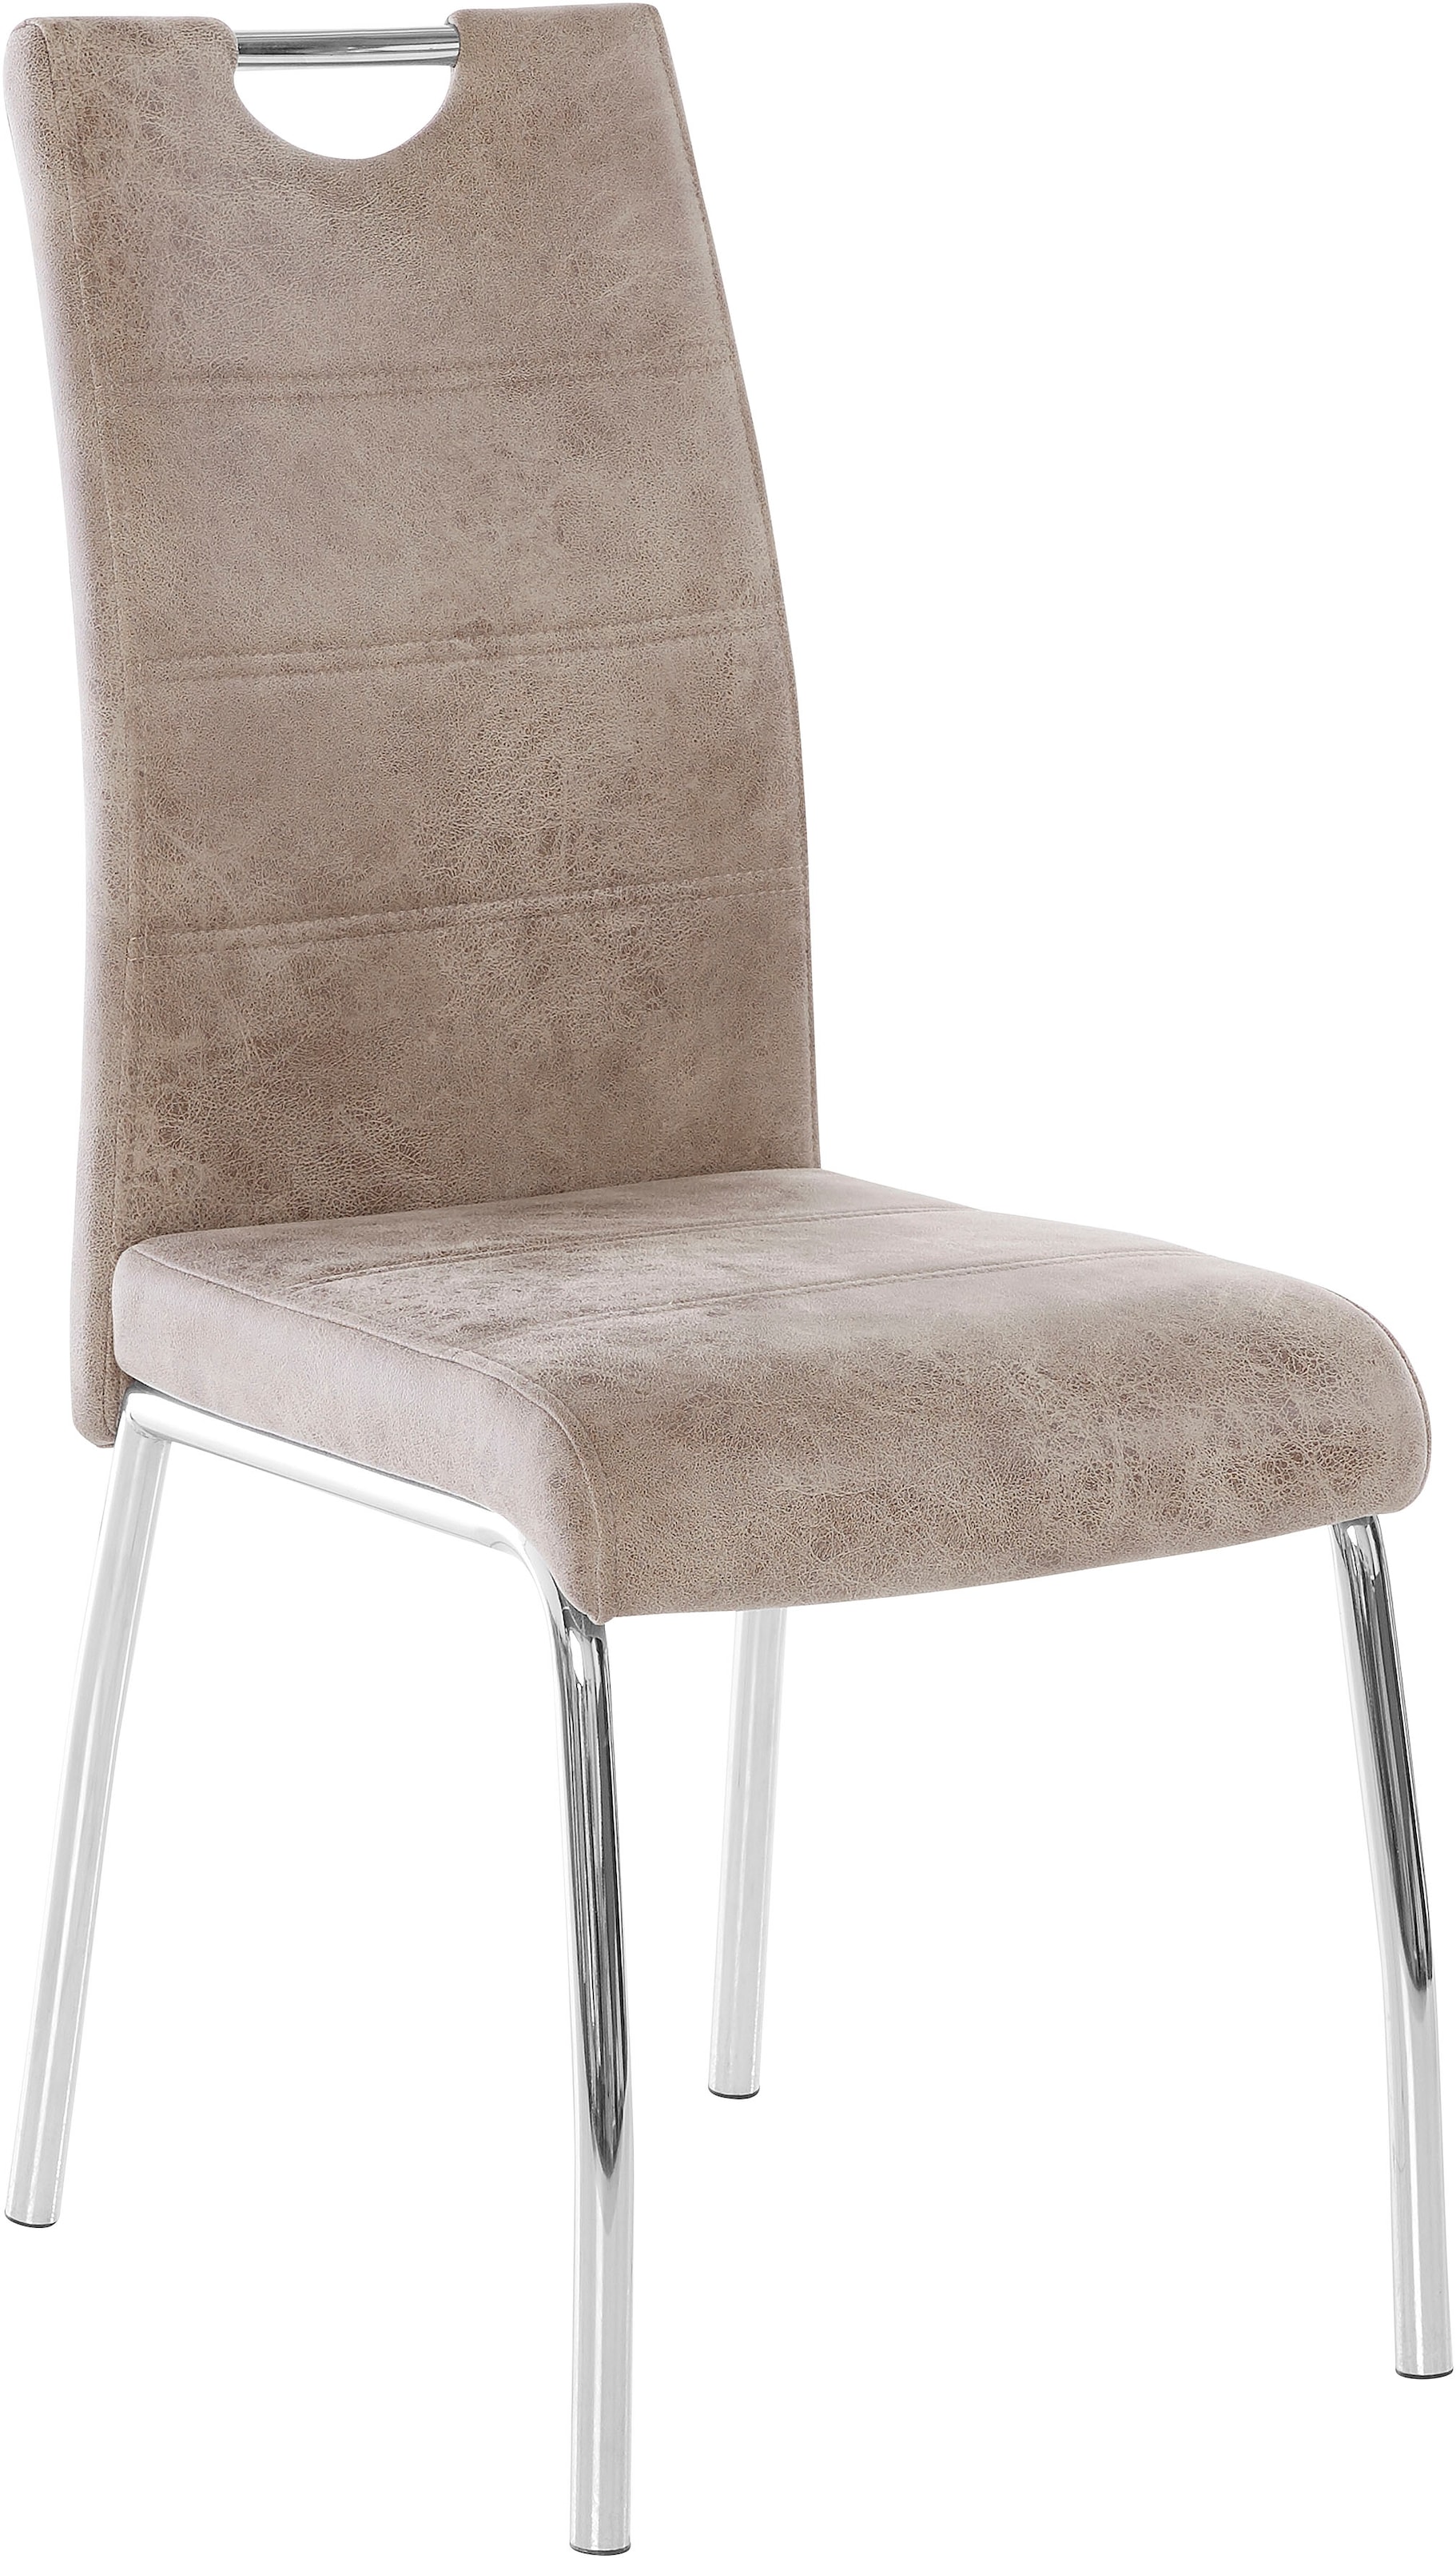 HELA Stuhl »Susi«, (Set), 4 oder 1, 4 St., 2 kaufen Stück Polyester, bequem